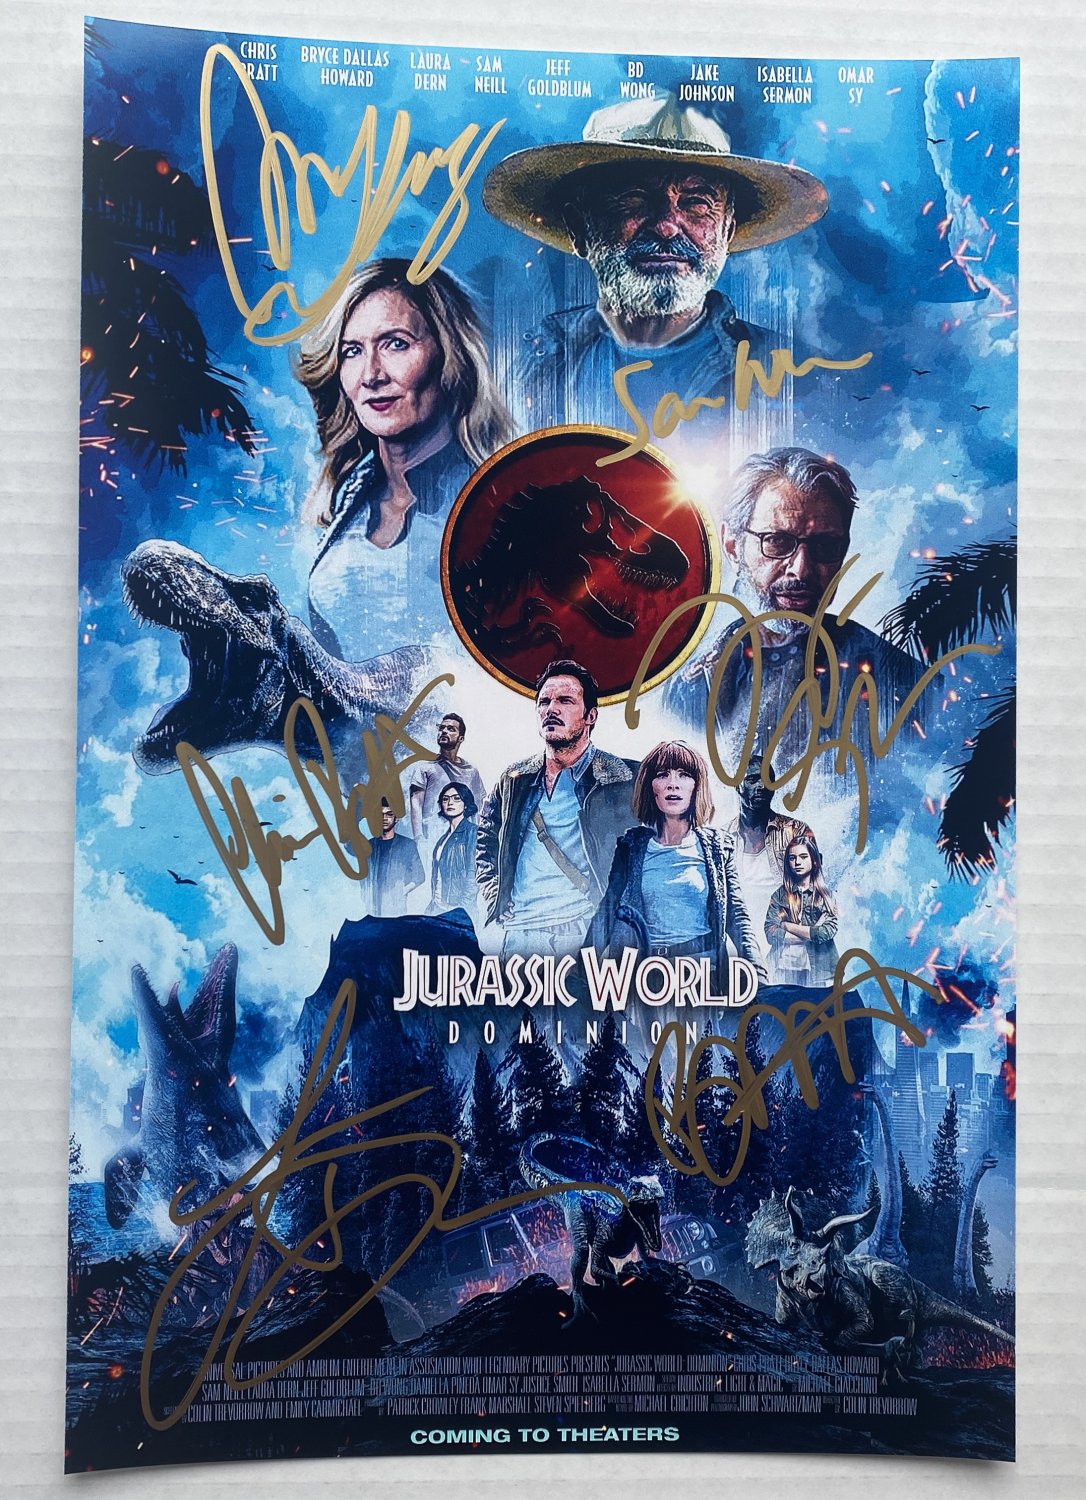 Jurassic World Dominion cast signed autographed 8x12 photo Sam Neill Chris Pratt photograph